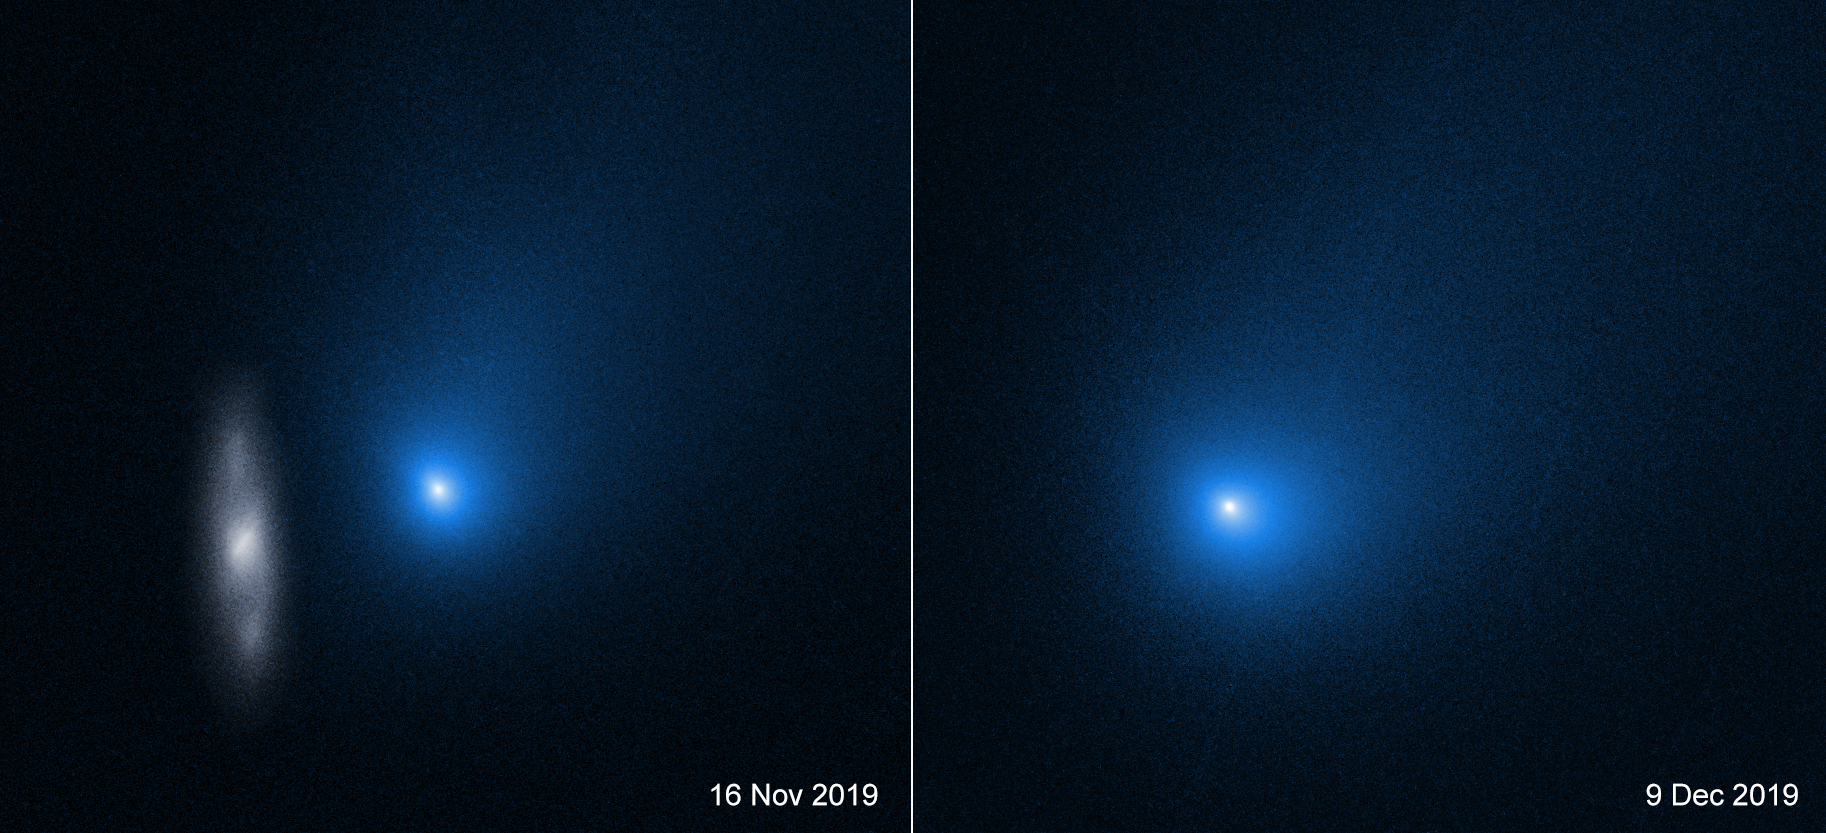 El cometa interestelar 2I Borisov